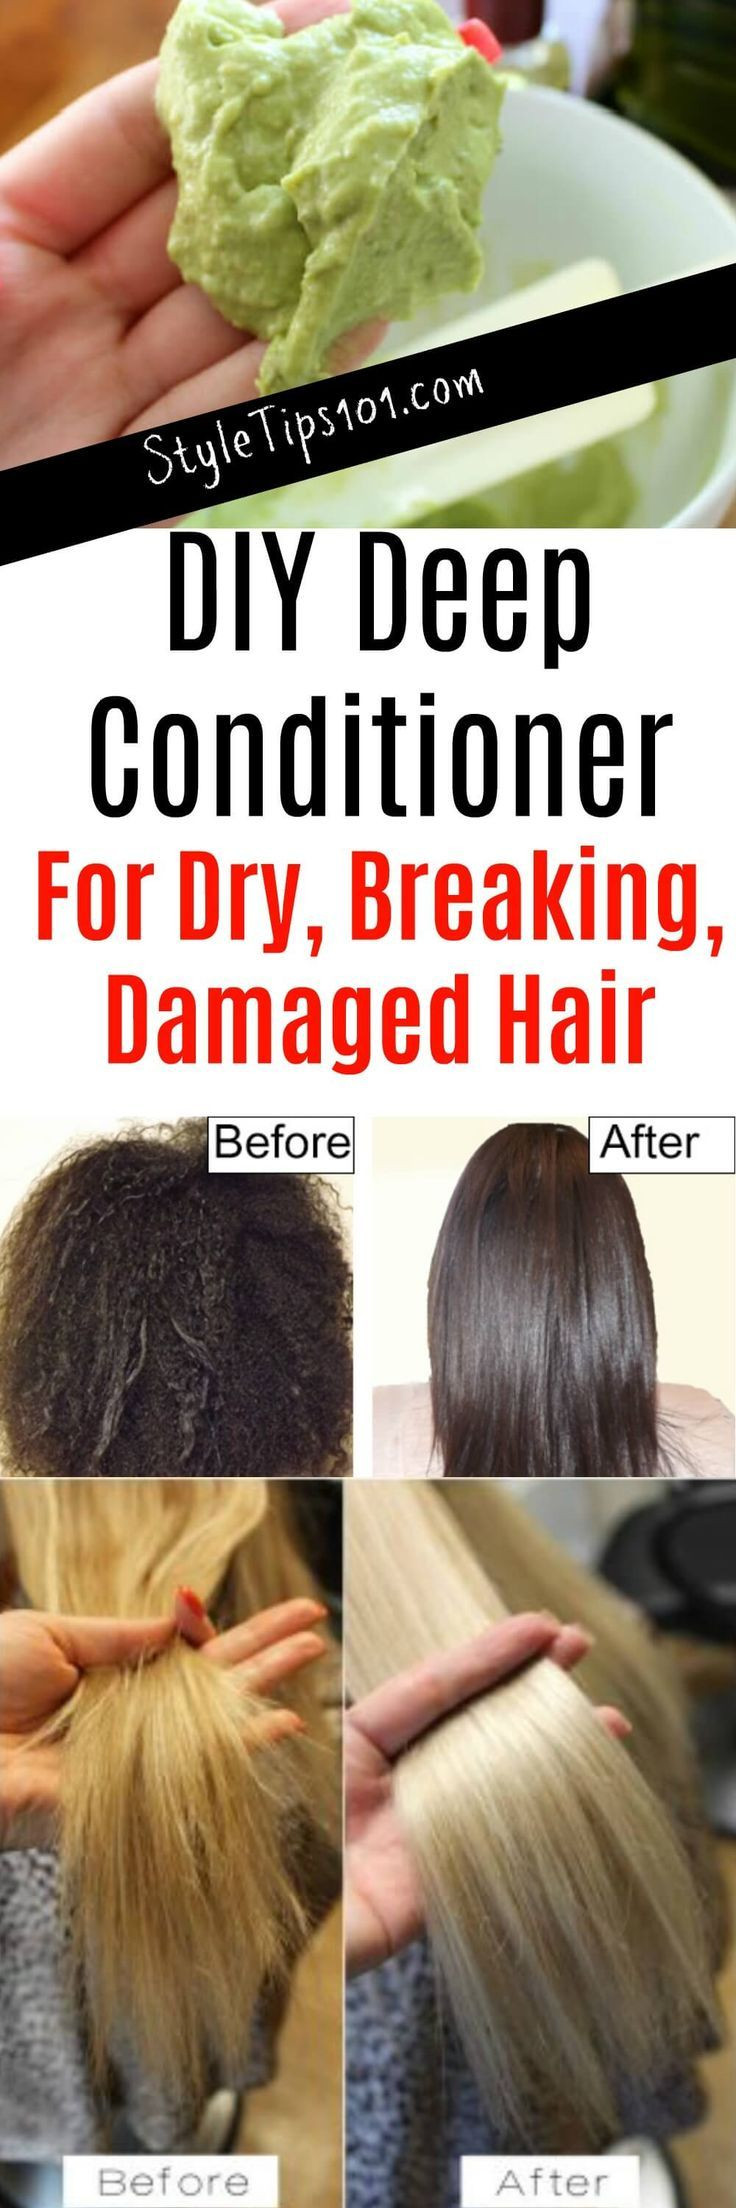 DIY Deep Conditioner For Damaged Hair
 Homemade Deep Conditioner for Dry Breaking Damaged Hair